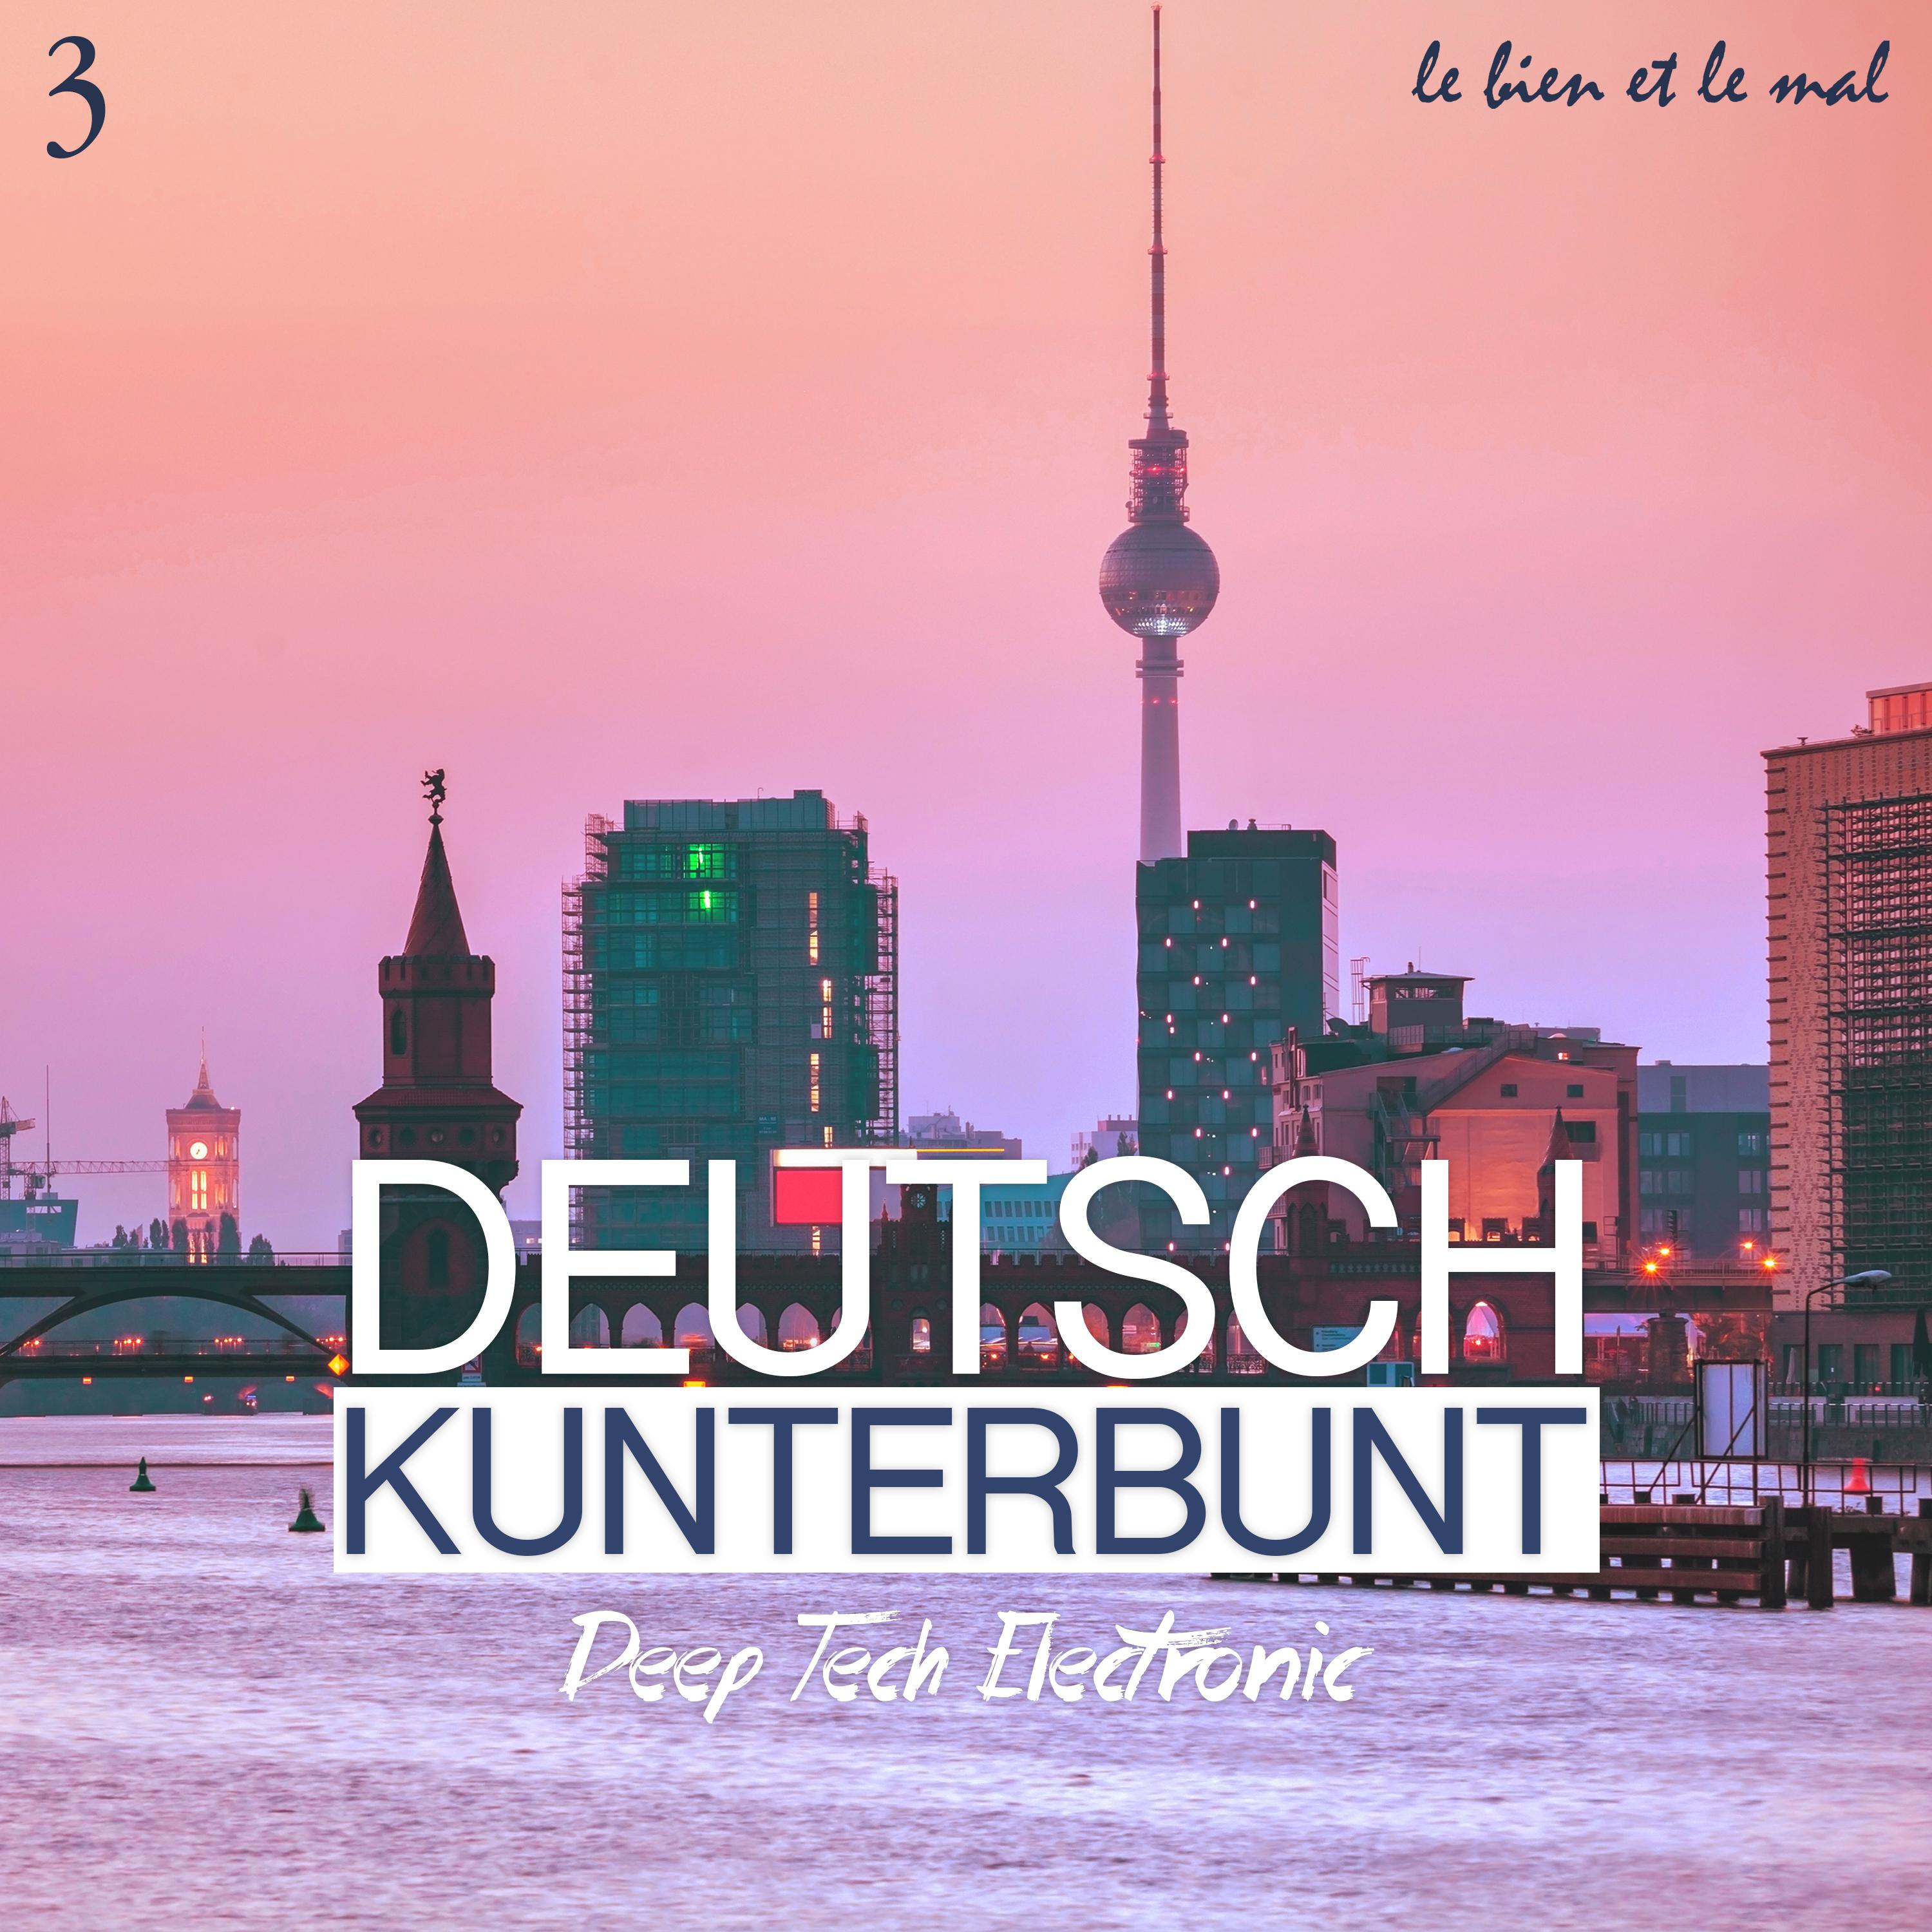 Deutsch Kunterbunt, Vol. 3 - Deep, Tech, Electronic